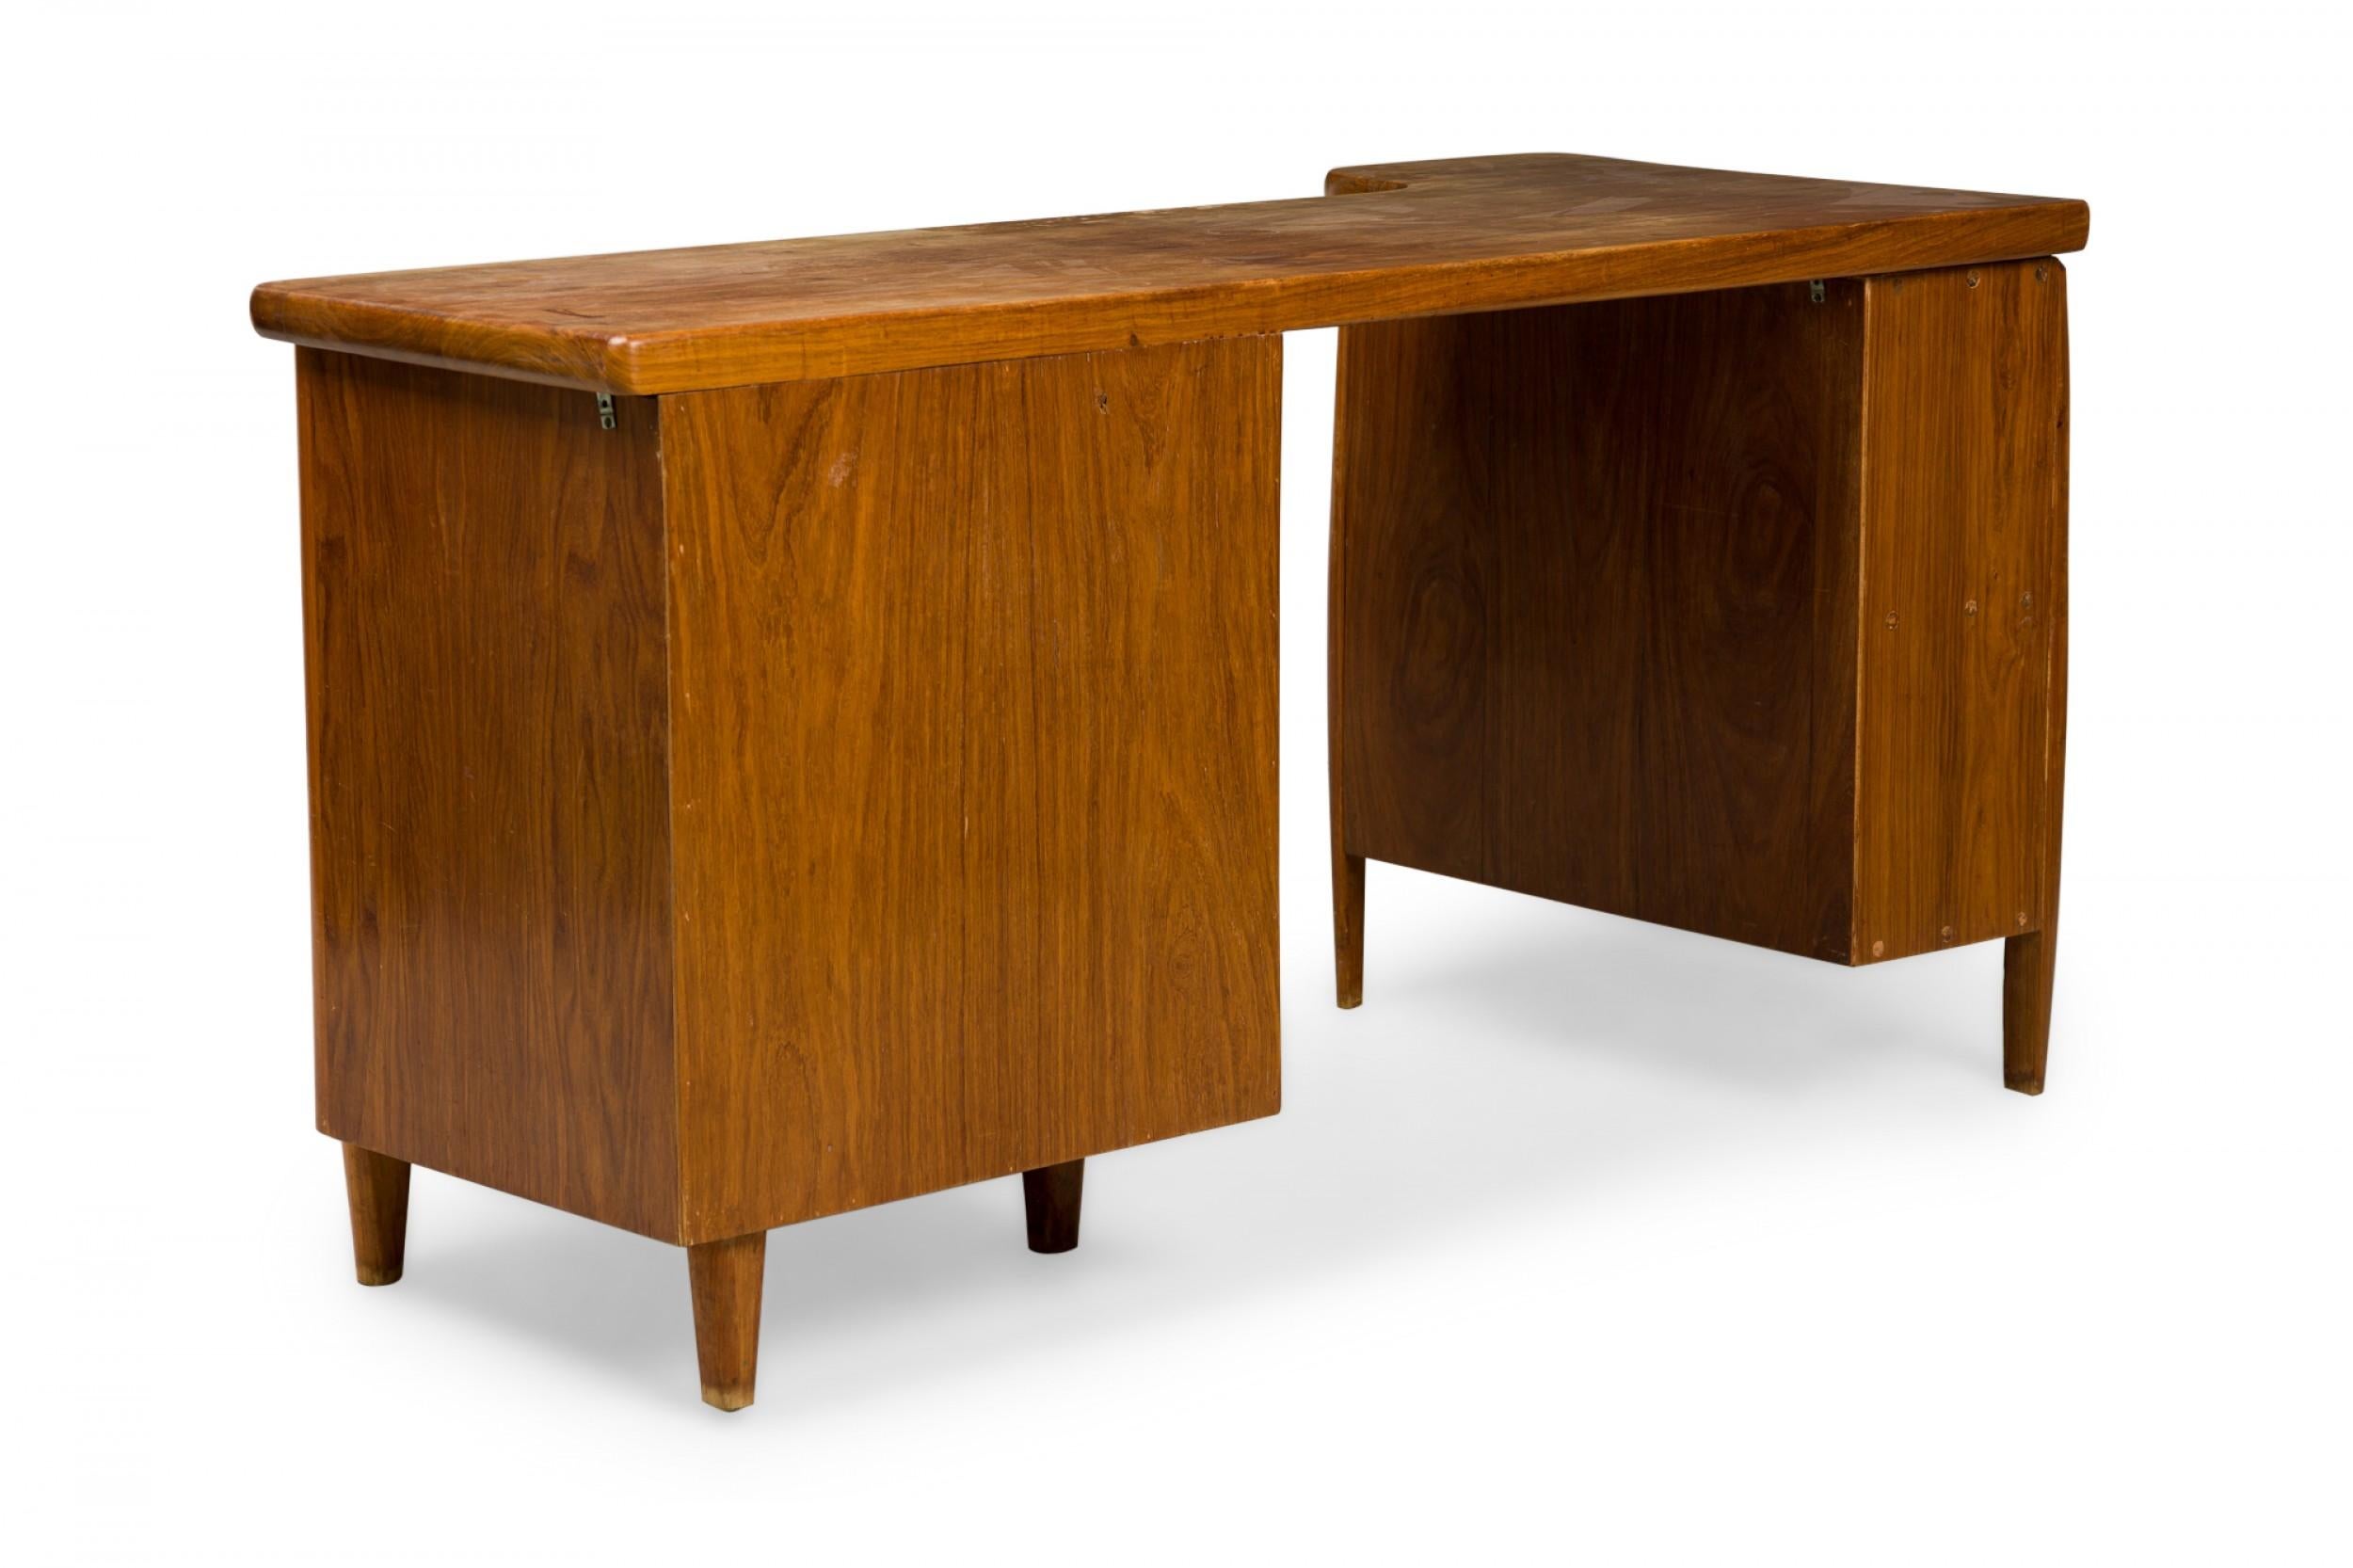 20th Century Italian Mid-Century Modern Walnut Desk, Style of Gio Ponti For Sale